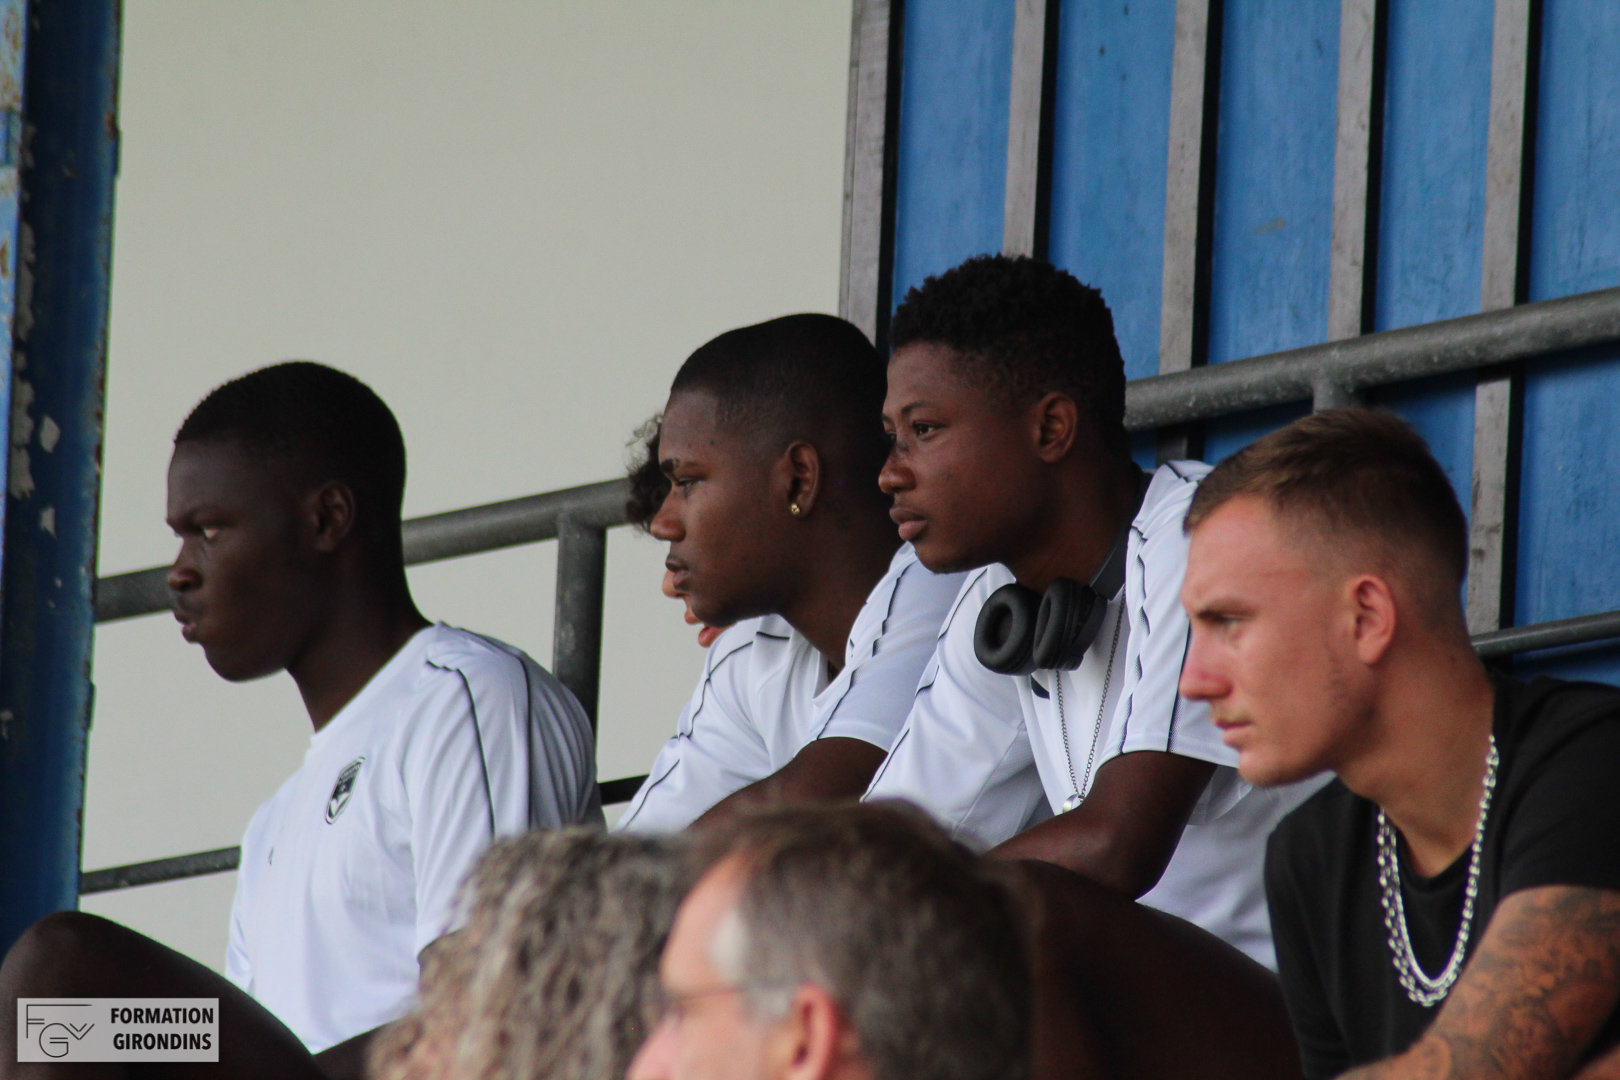 Cfa Girondins : Daouda Diallo était présent hier au match amical - Formation Girondins 